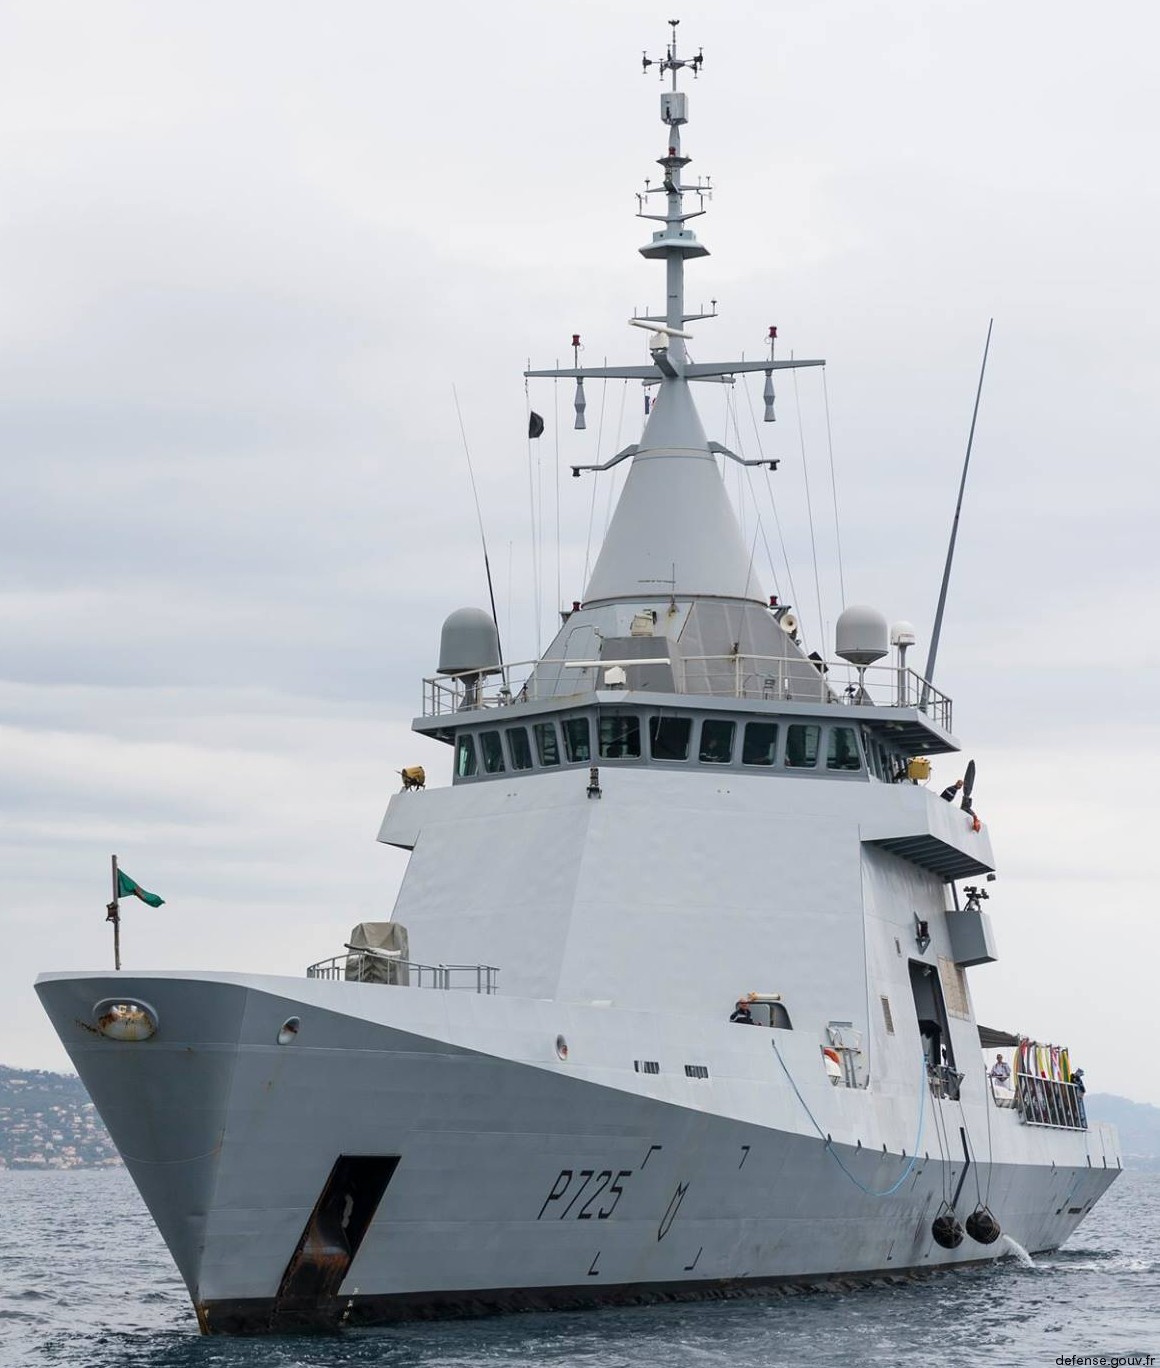 p-725 l'adroit offshore patrol vessel opv french navy patrouilleur hauturier marine nationale gowind dcns 04